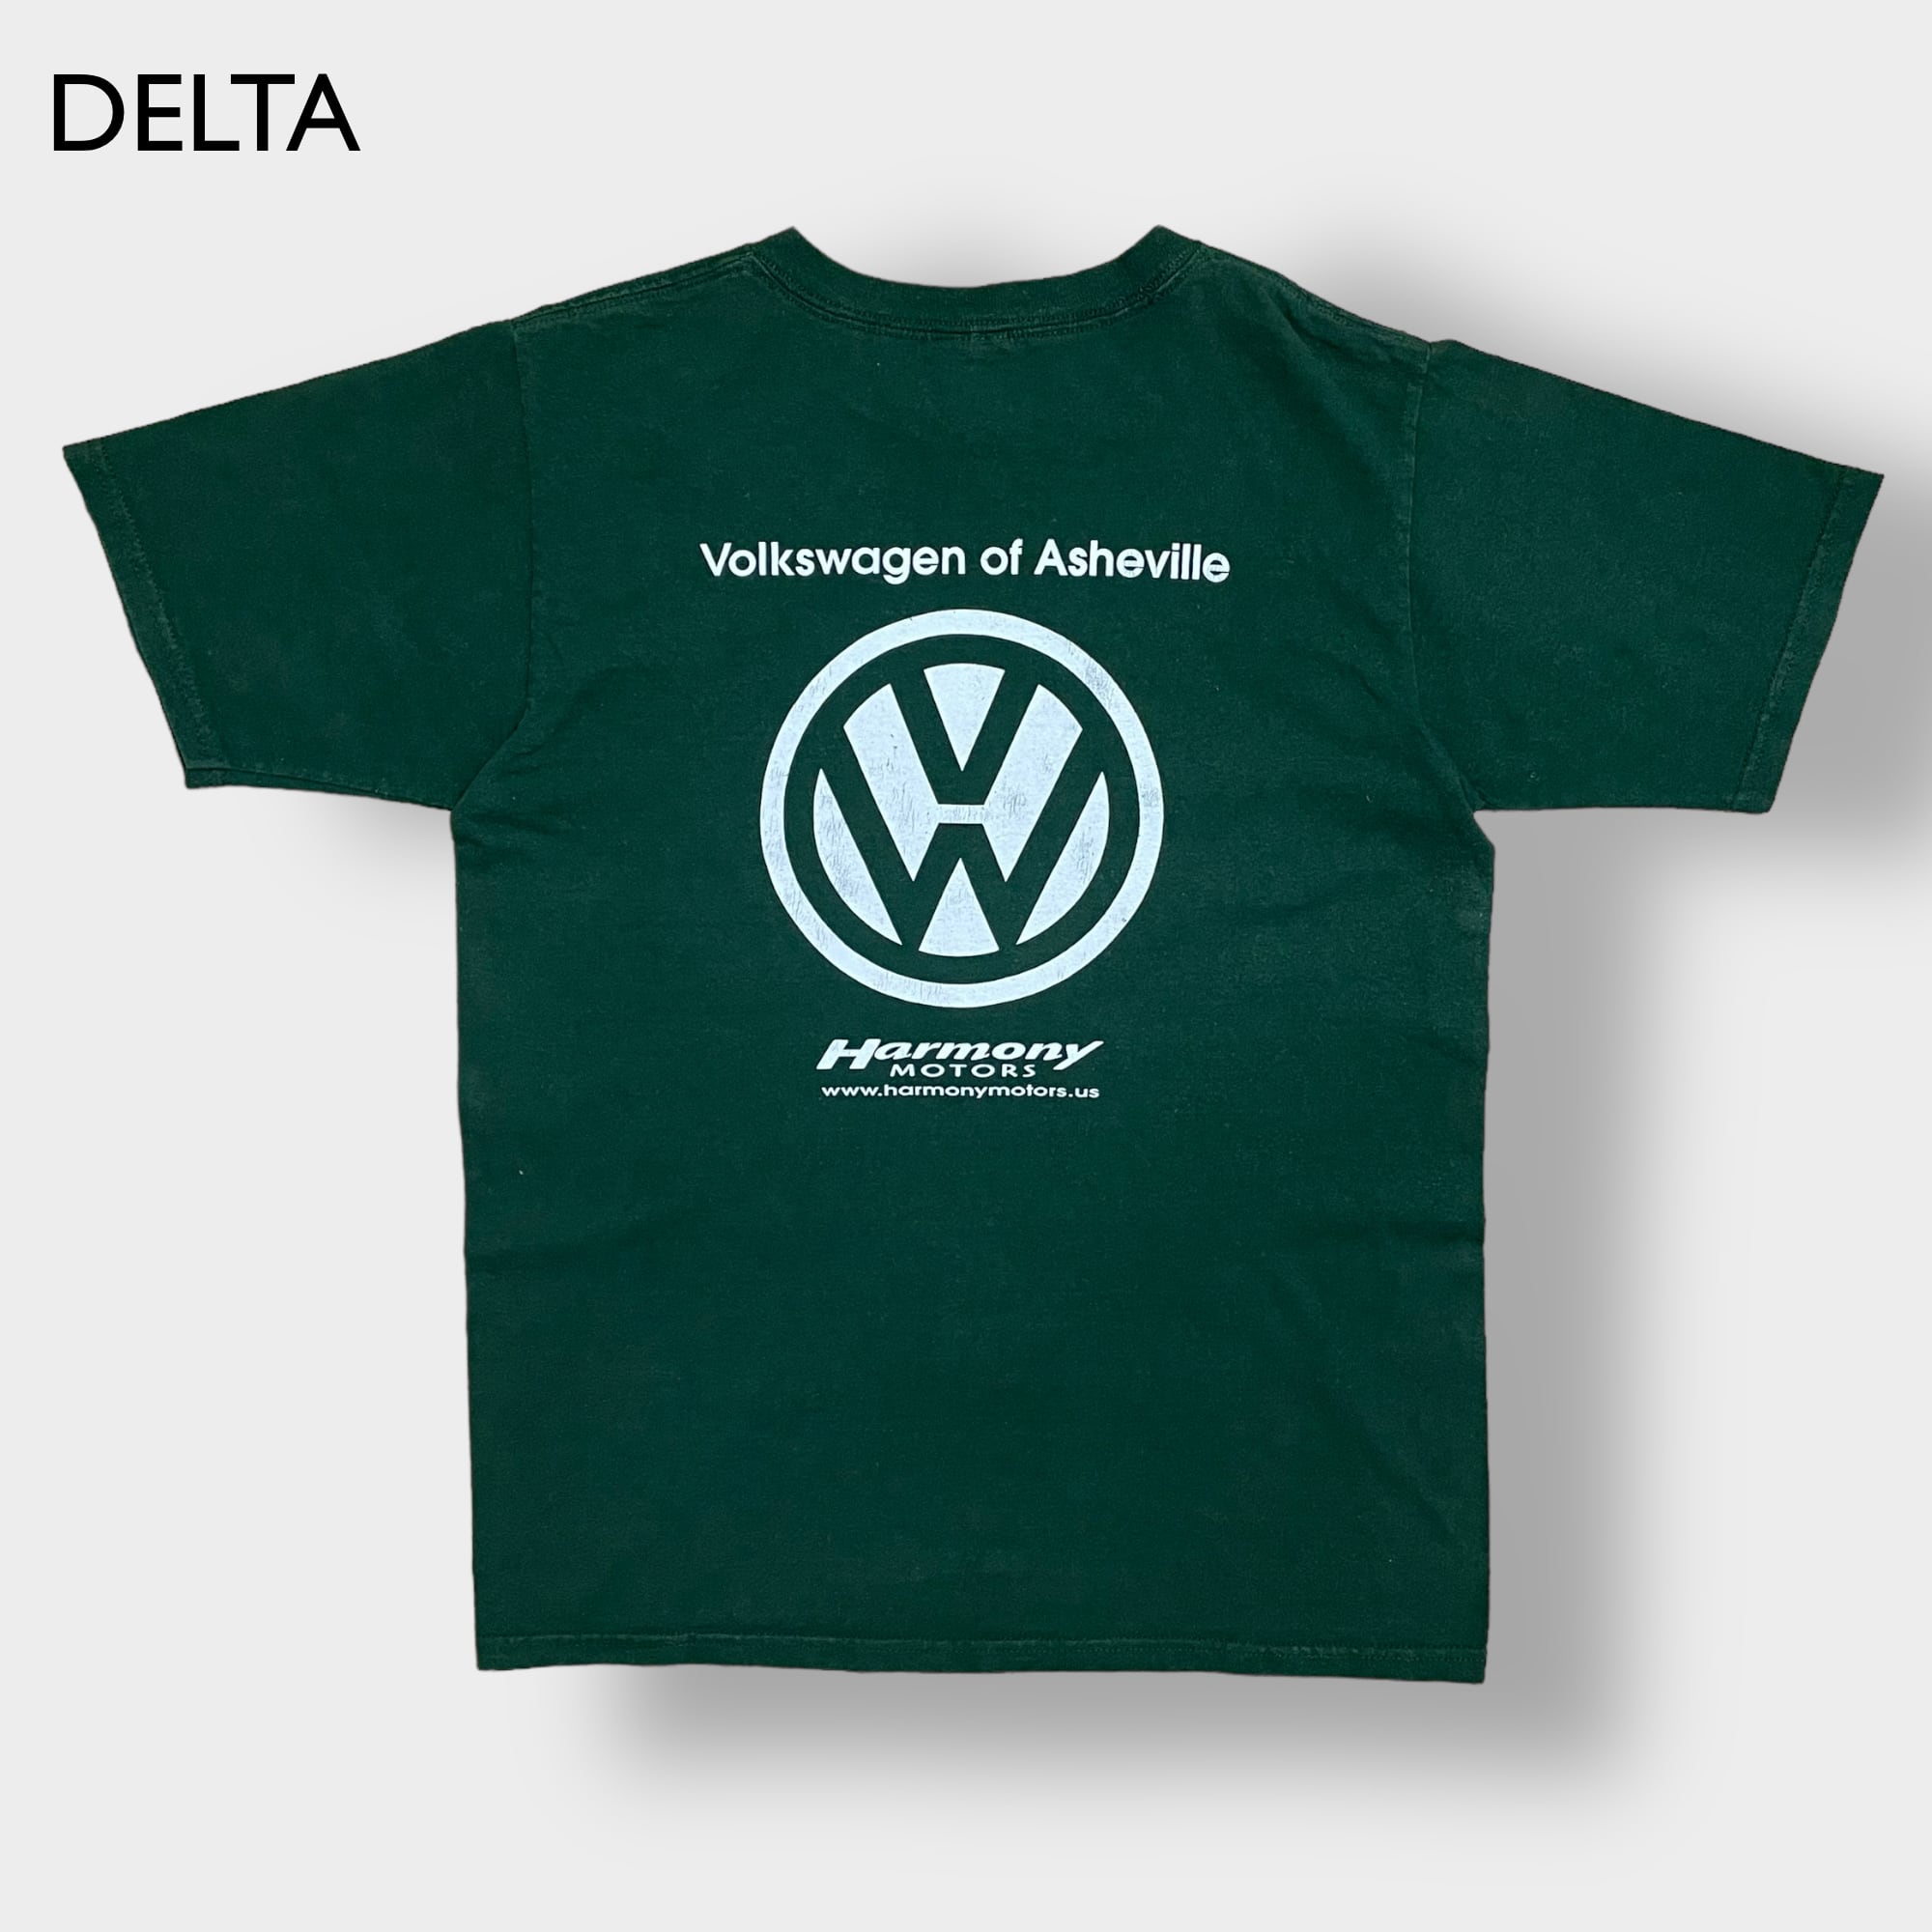 【DELTA】USA素材 企業系 フォルクスワーゲン ロゴ Tシャツ ...